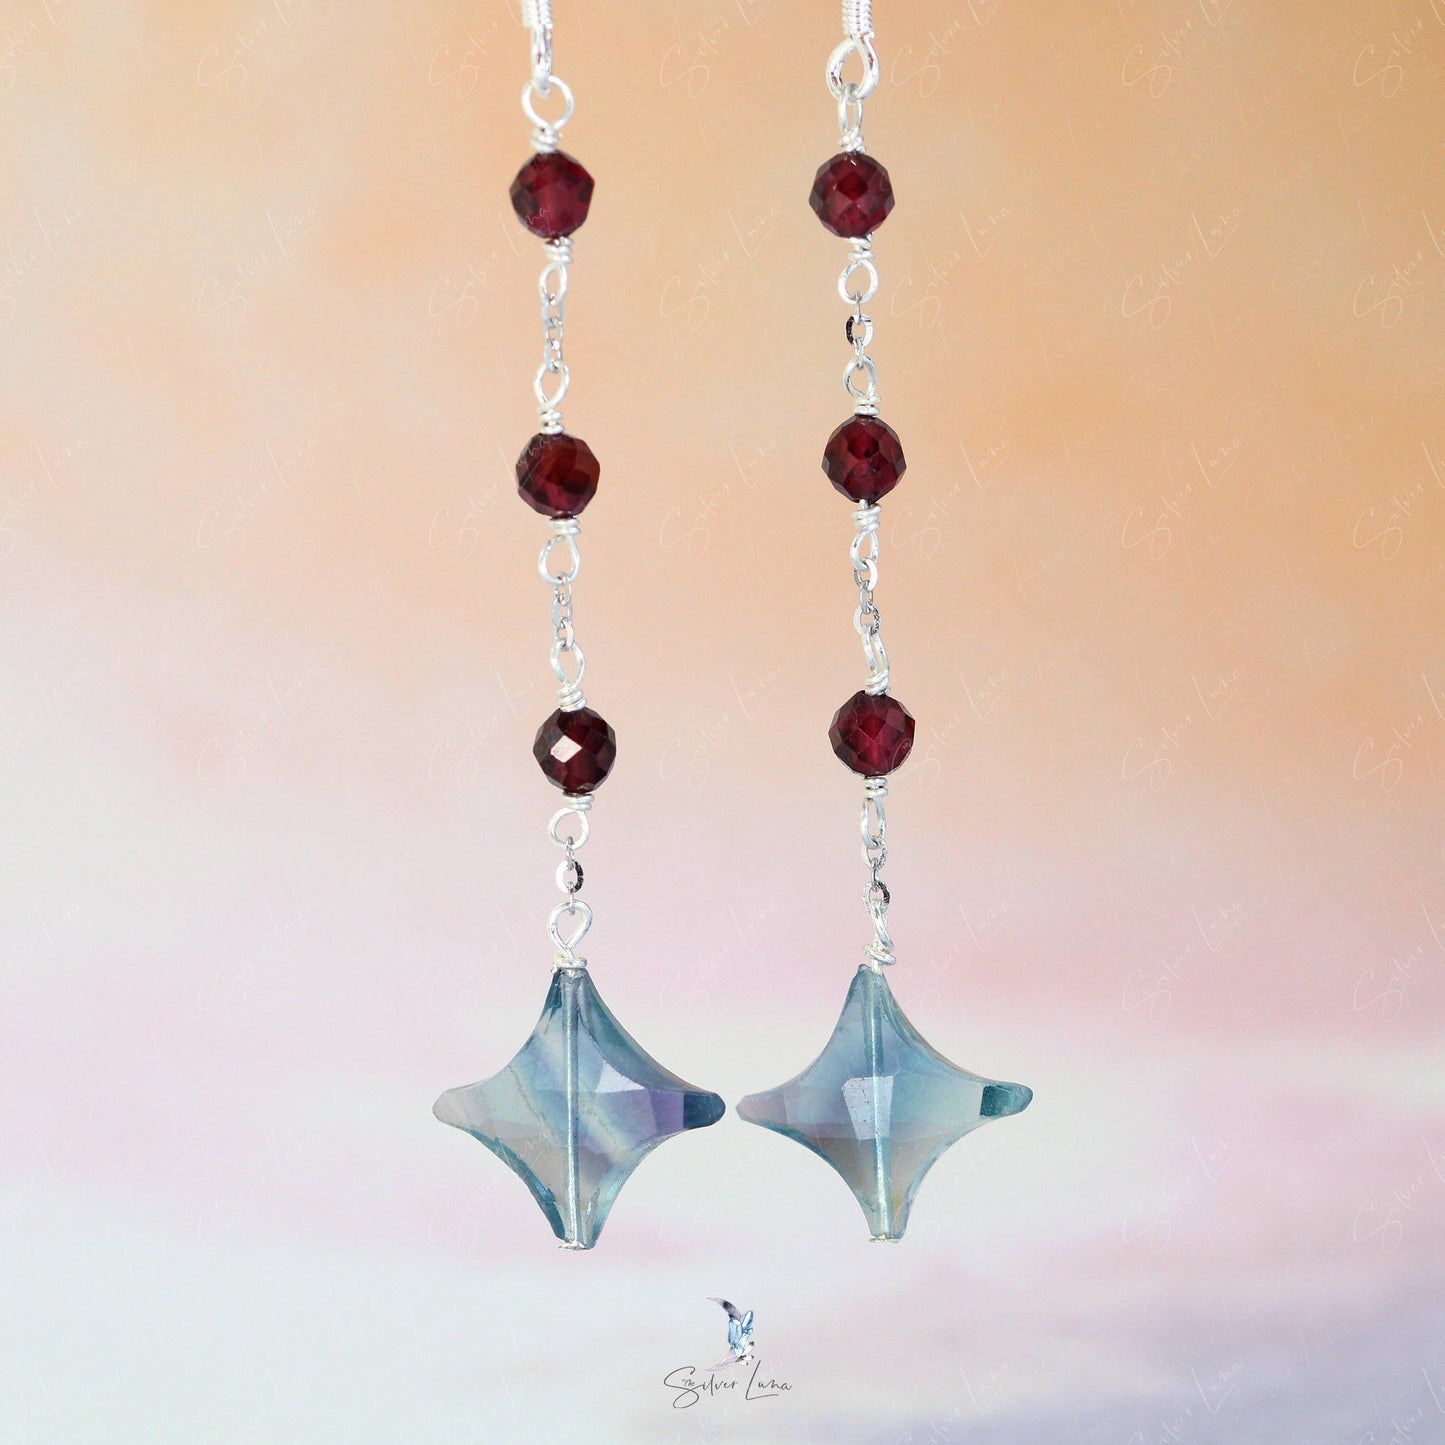 Fluorite star and red garnet beads cascade drop earrings